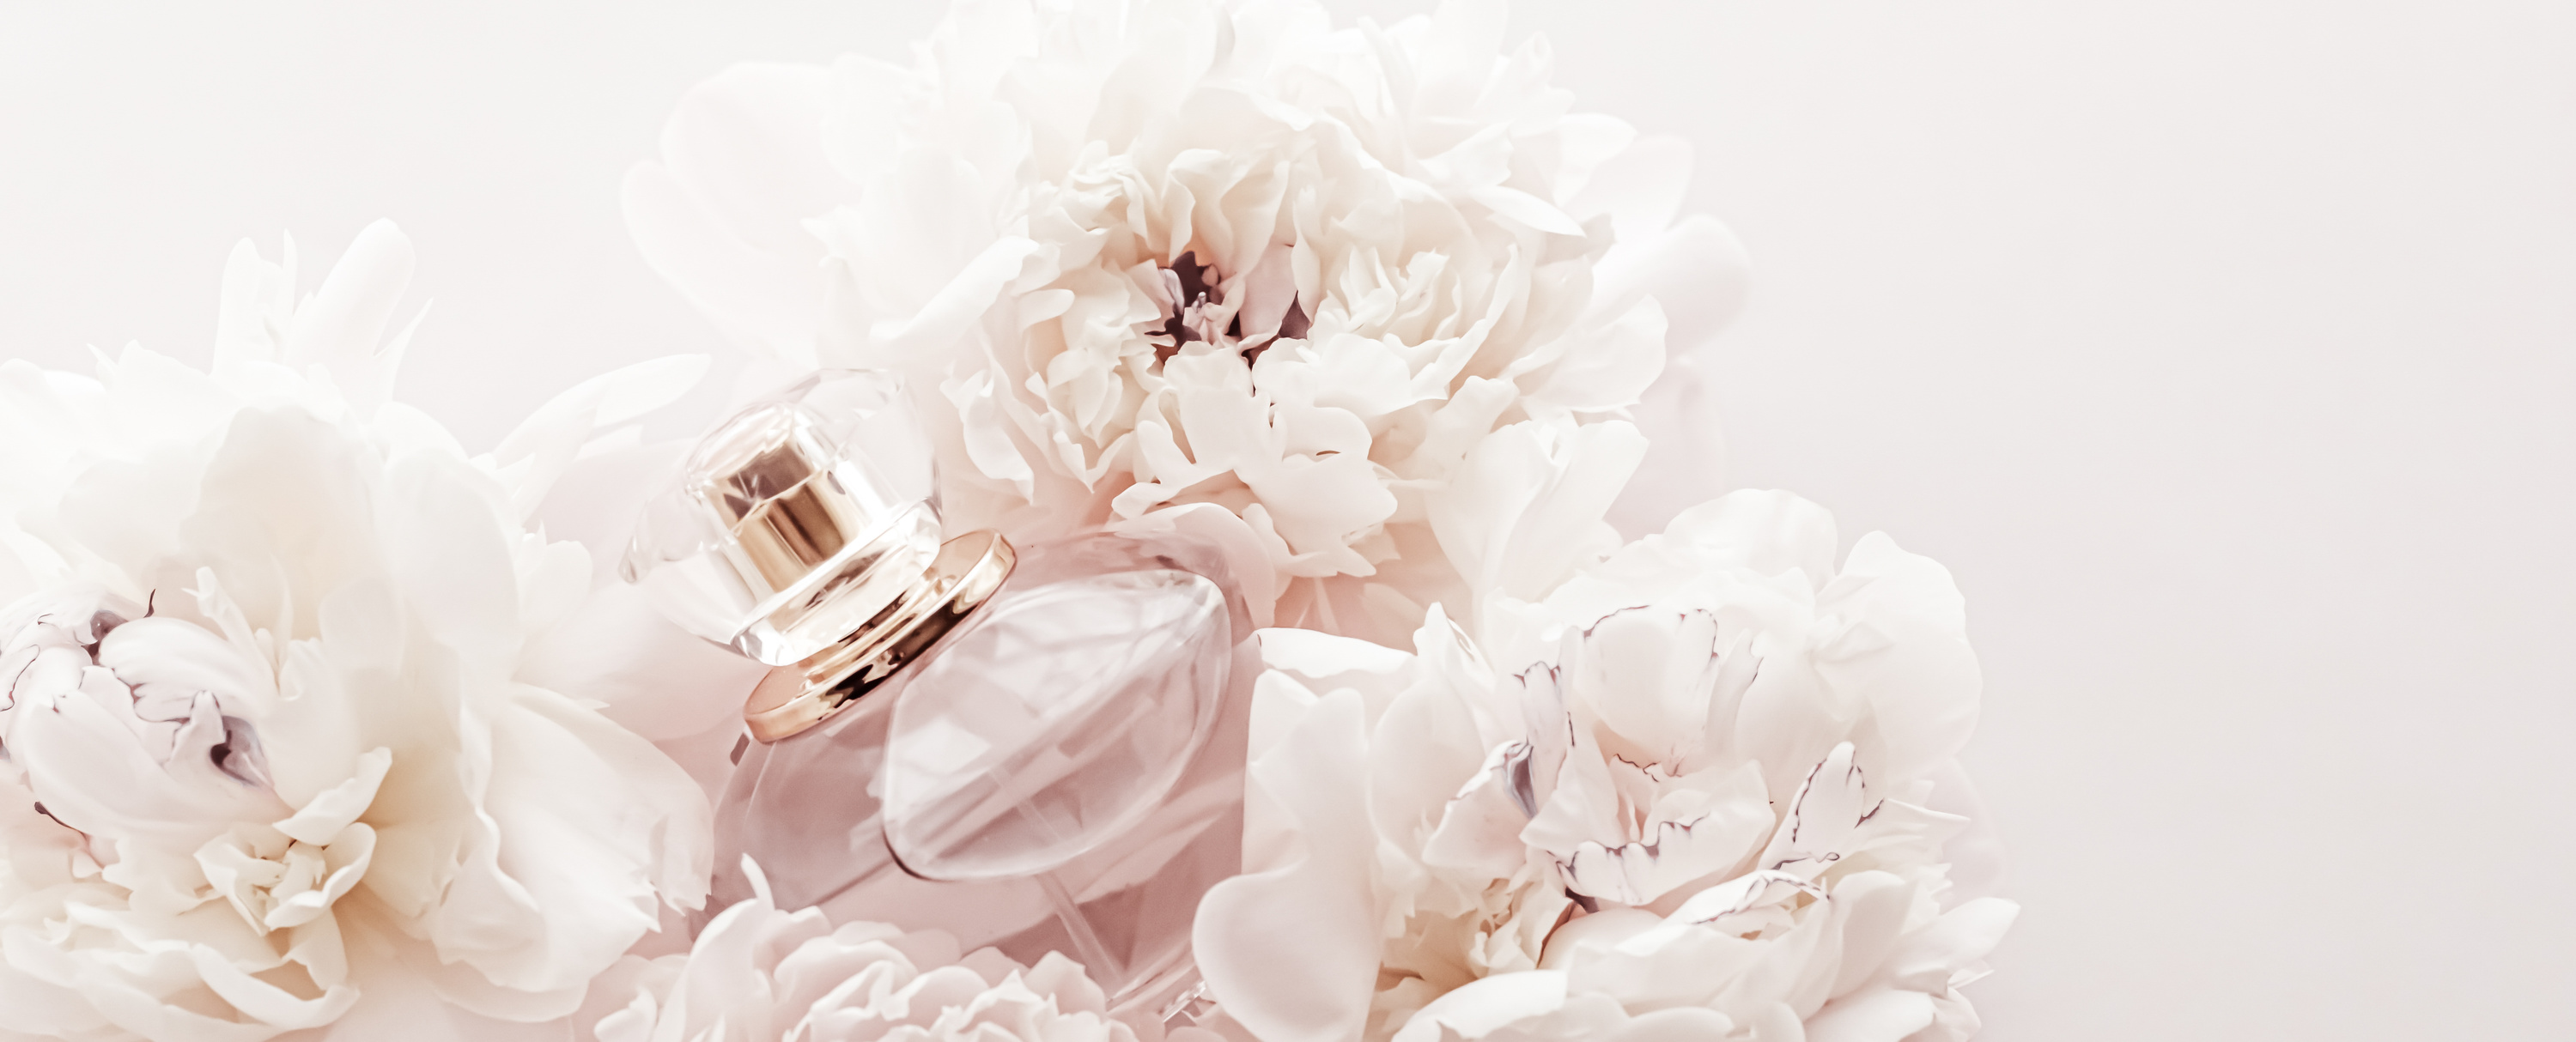 Fragrance Bottle as Luxury Perfume Product on Background of Peon